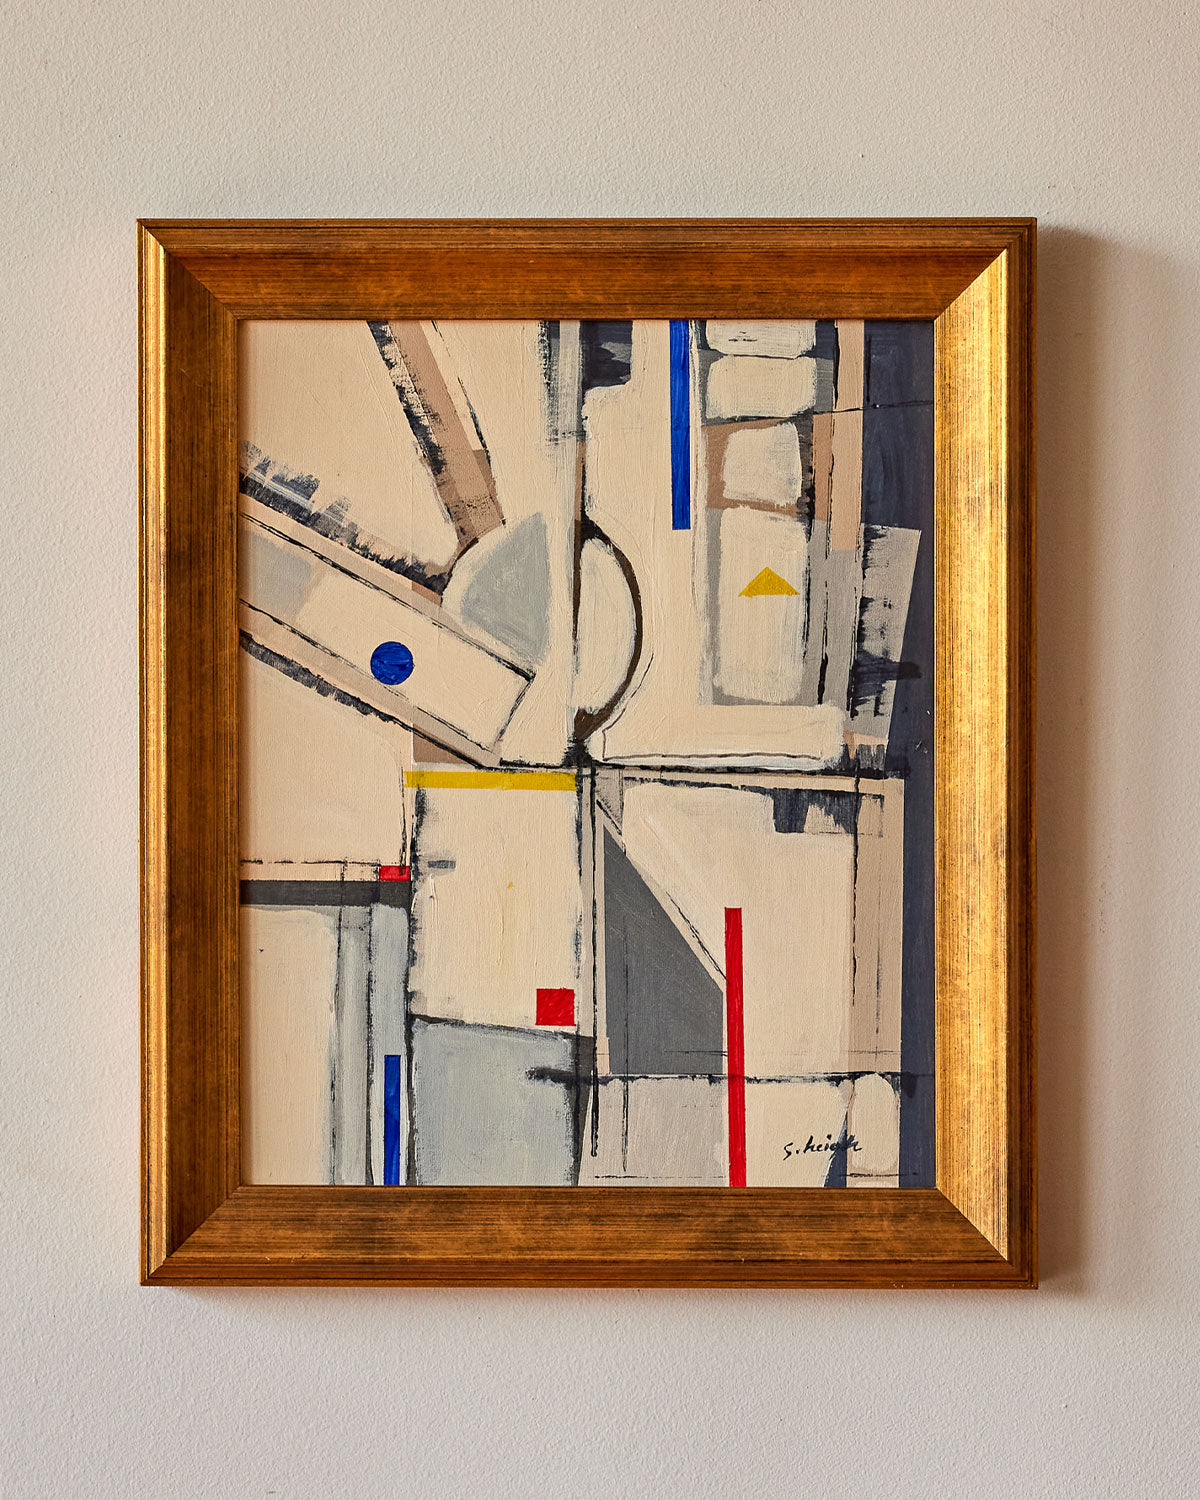 "Bauhaus" by Stephen Heigh